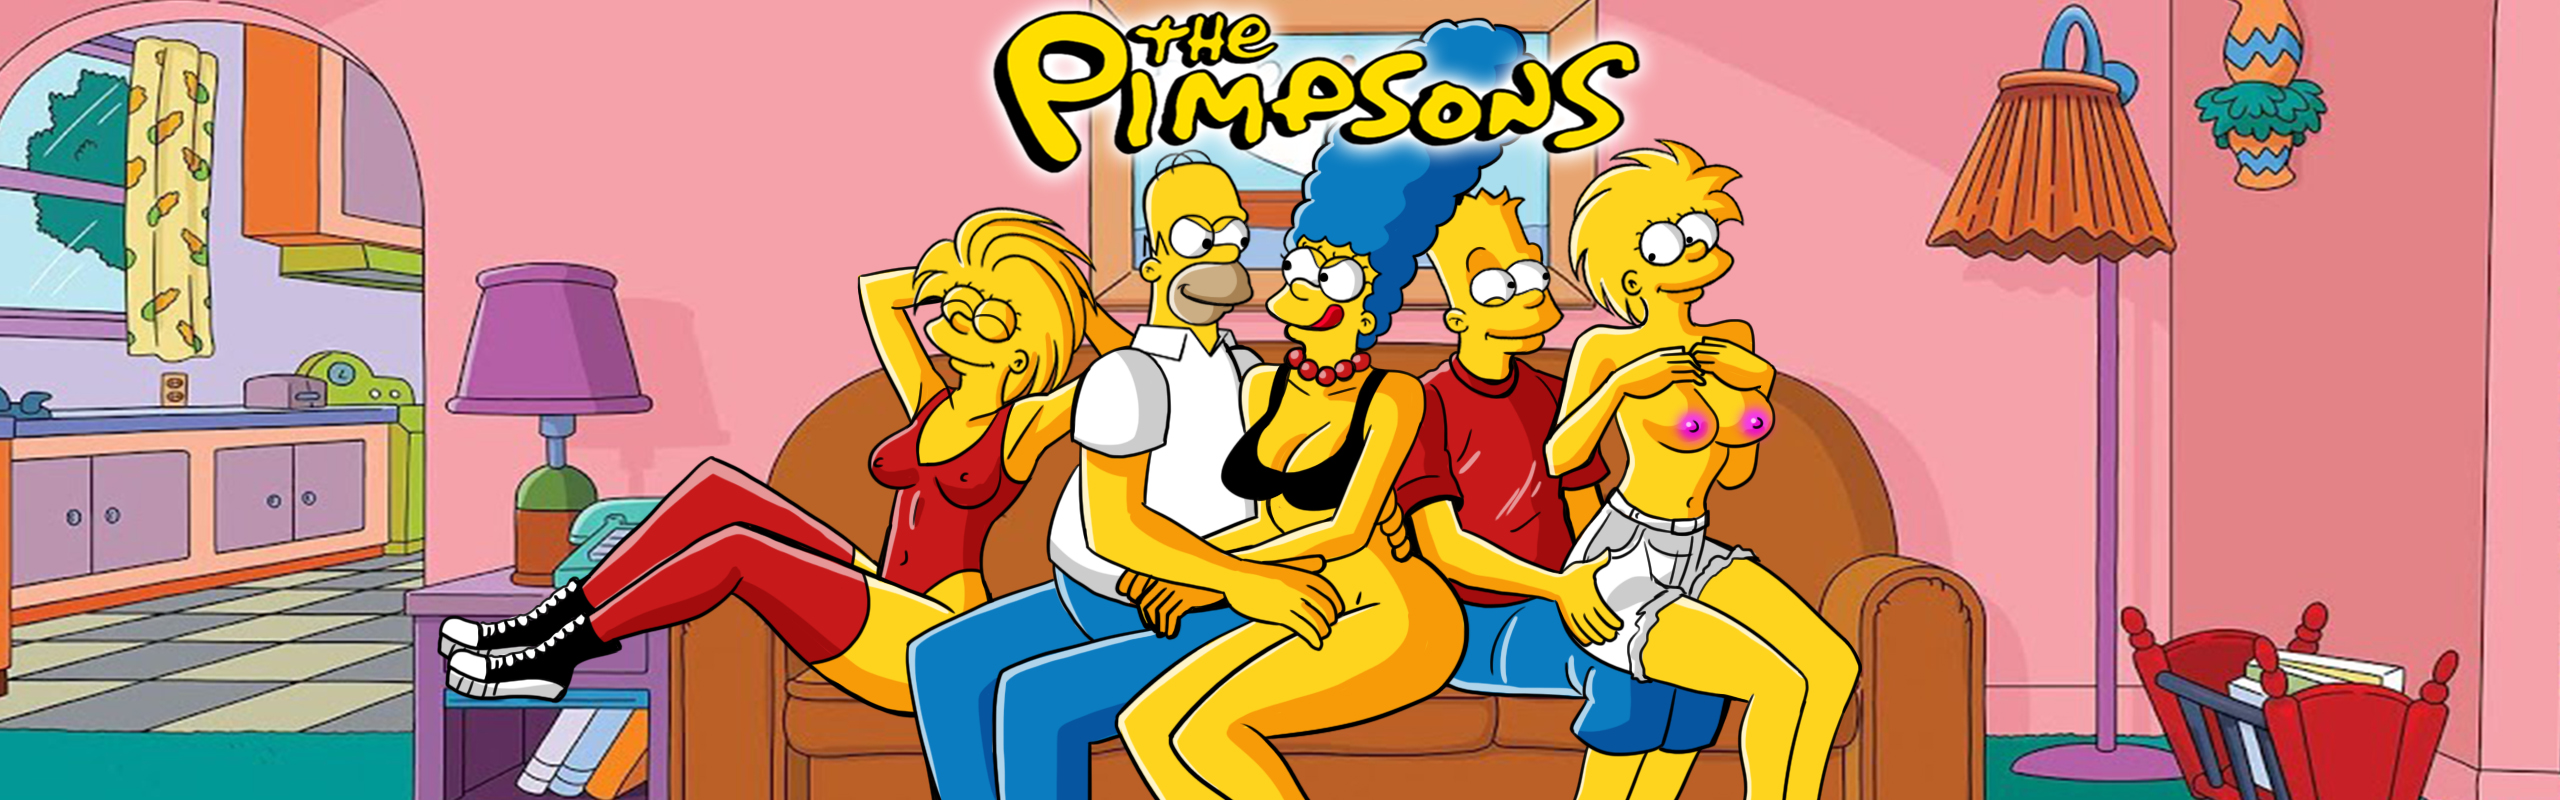 The Pimpsons